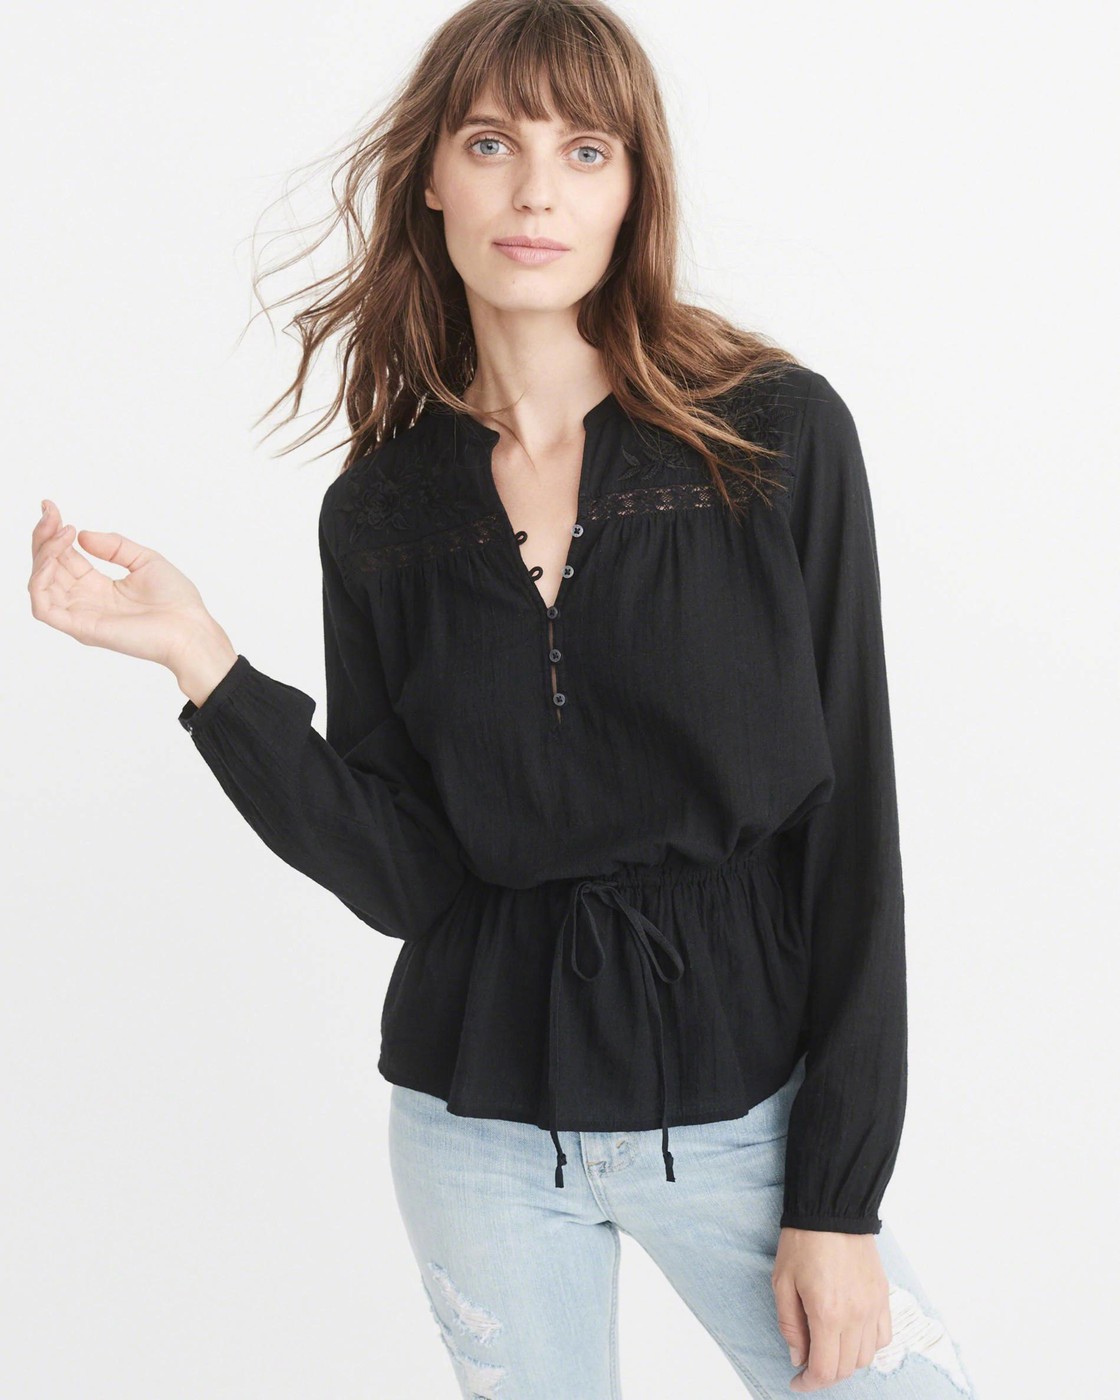 Женская блузка - блуза Abercrombie & Fitch, XS, XS